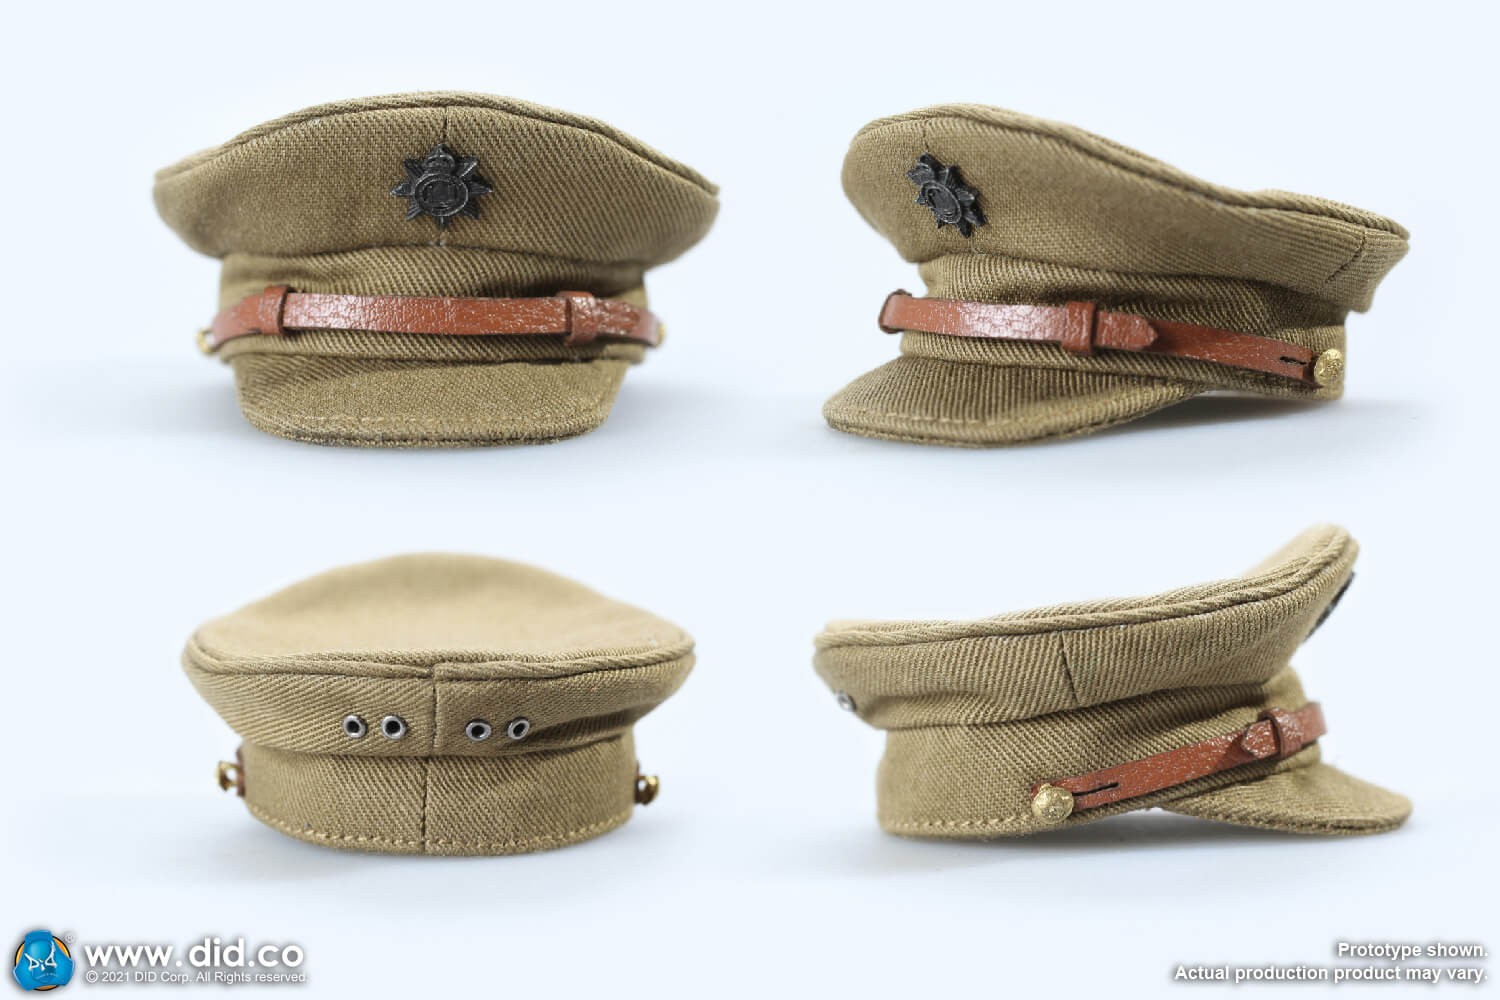 WW1 British Officer – Colonel Mackenzie B11012